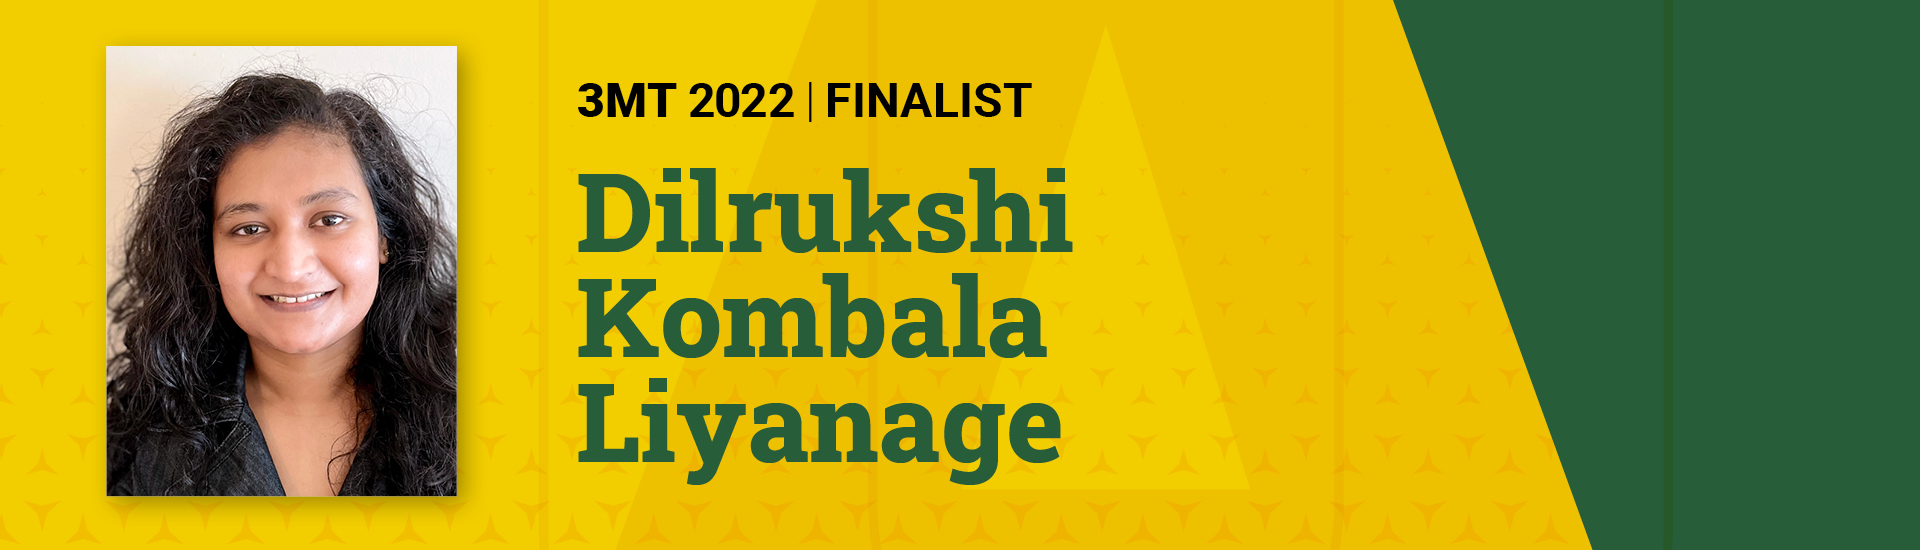 3MT 2022 Finalist Dilrukshi Kombala Liyanage